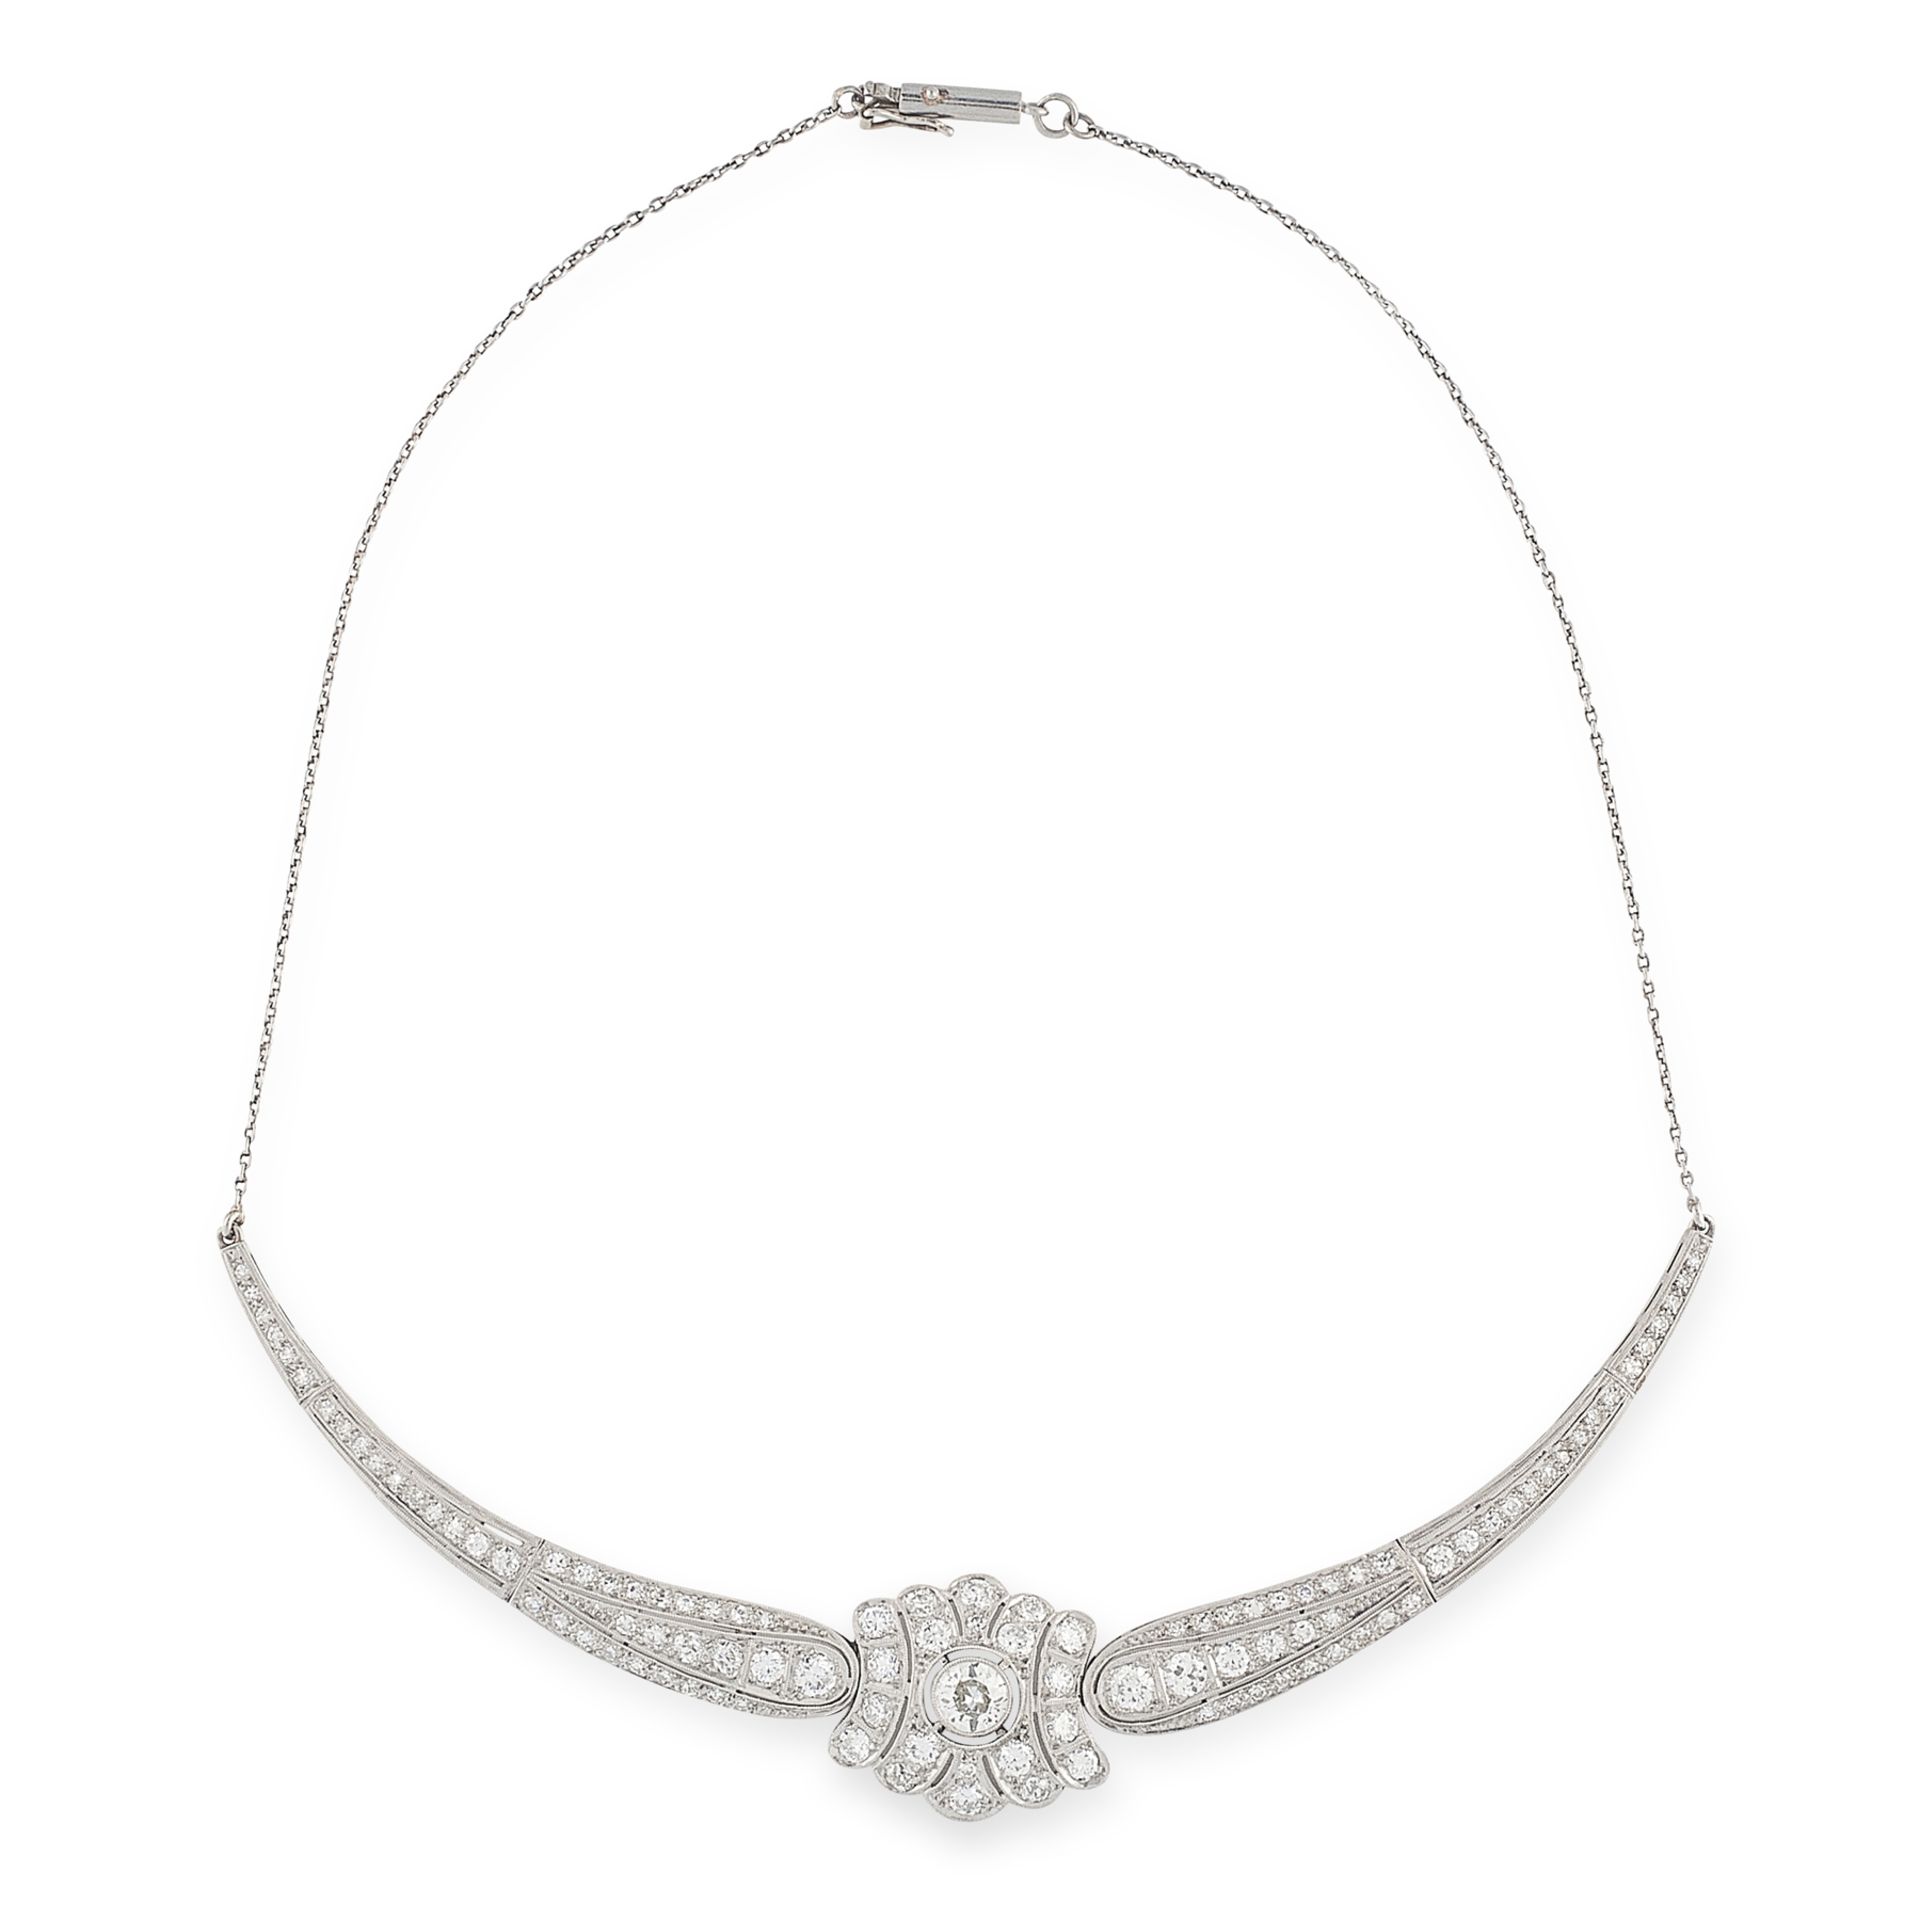 A VINTAGE DIAMOND NECKLACE, CIRCA 1950 the central motif set with a principal round cut diamond of